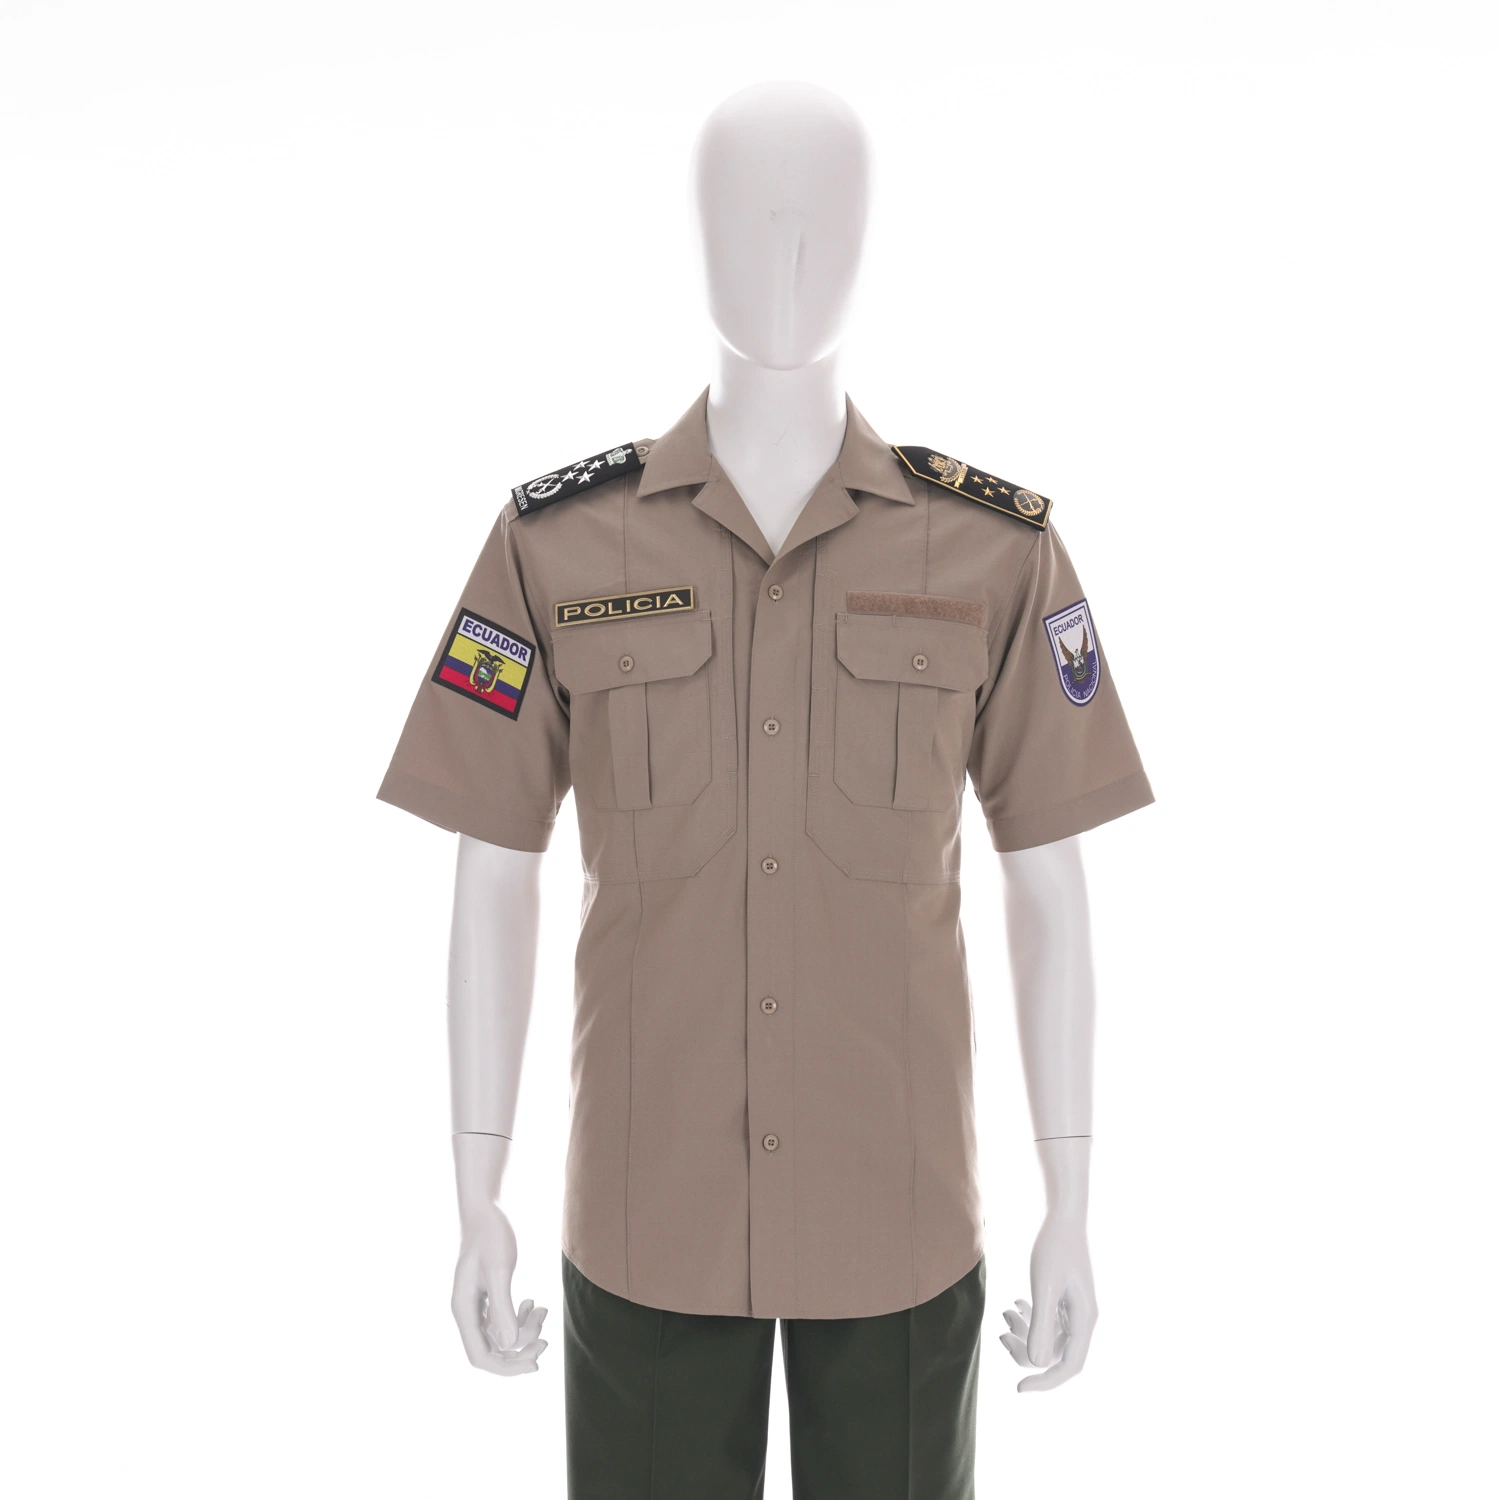 China Police Military Uniform Shirts